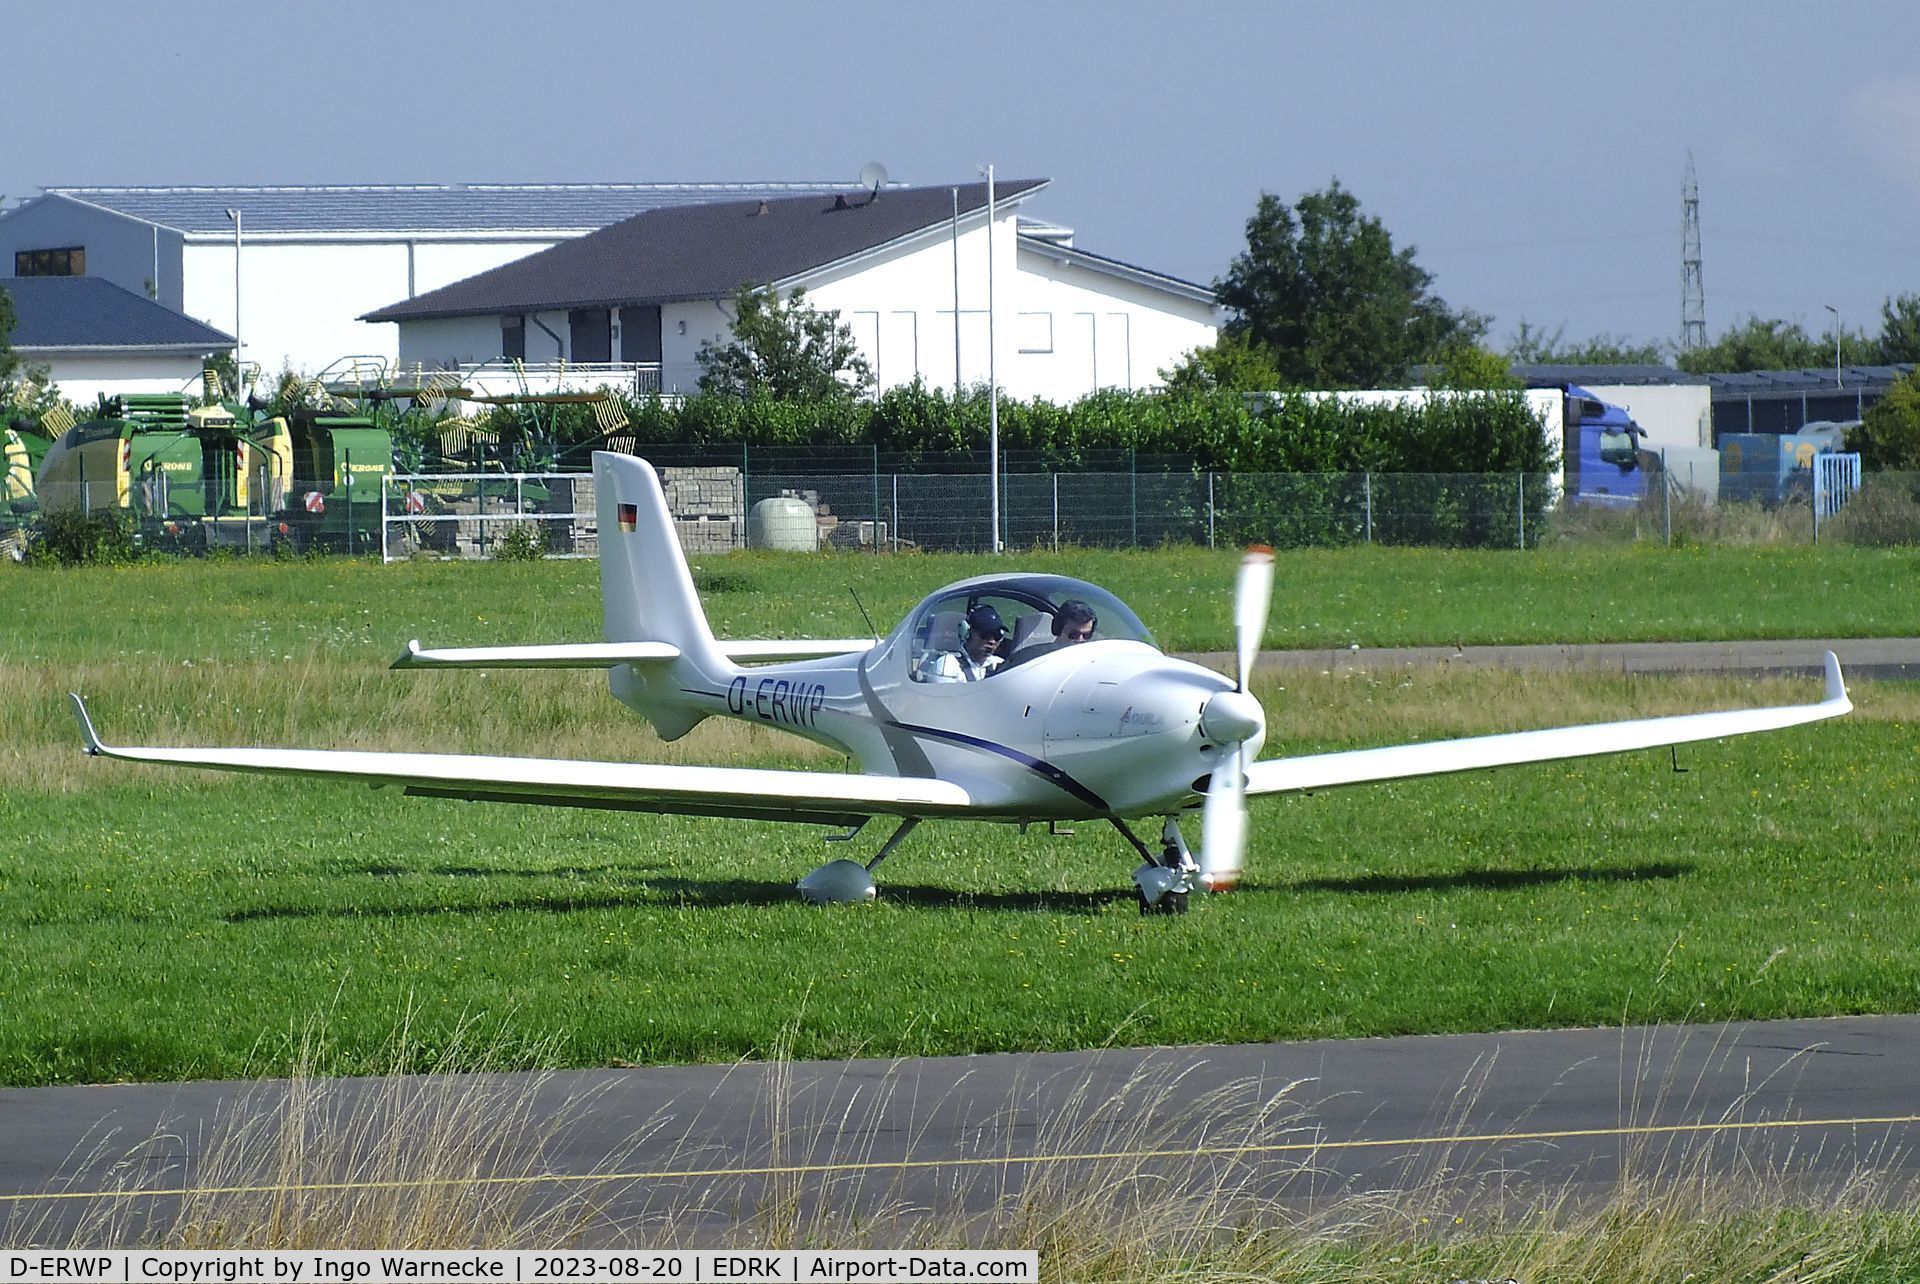 D-ERWP, Aquila A210 (AT01) C/N AT01-112, Aquila A210 (AT01) at Koblenz-Winningen airfield